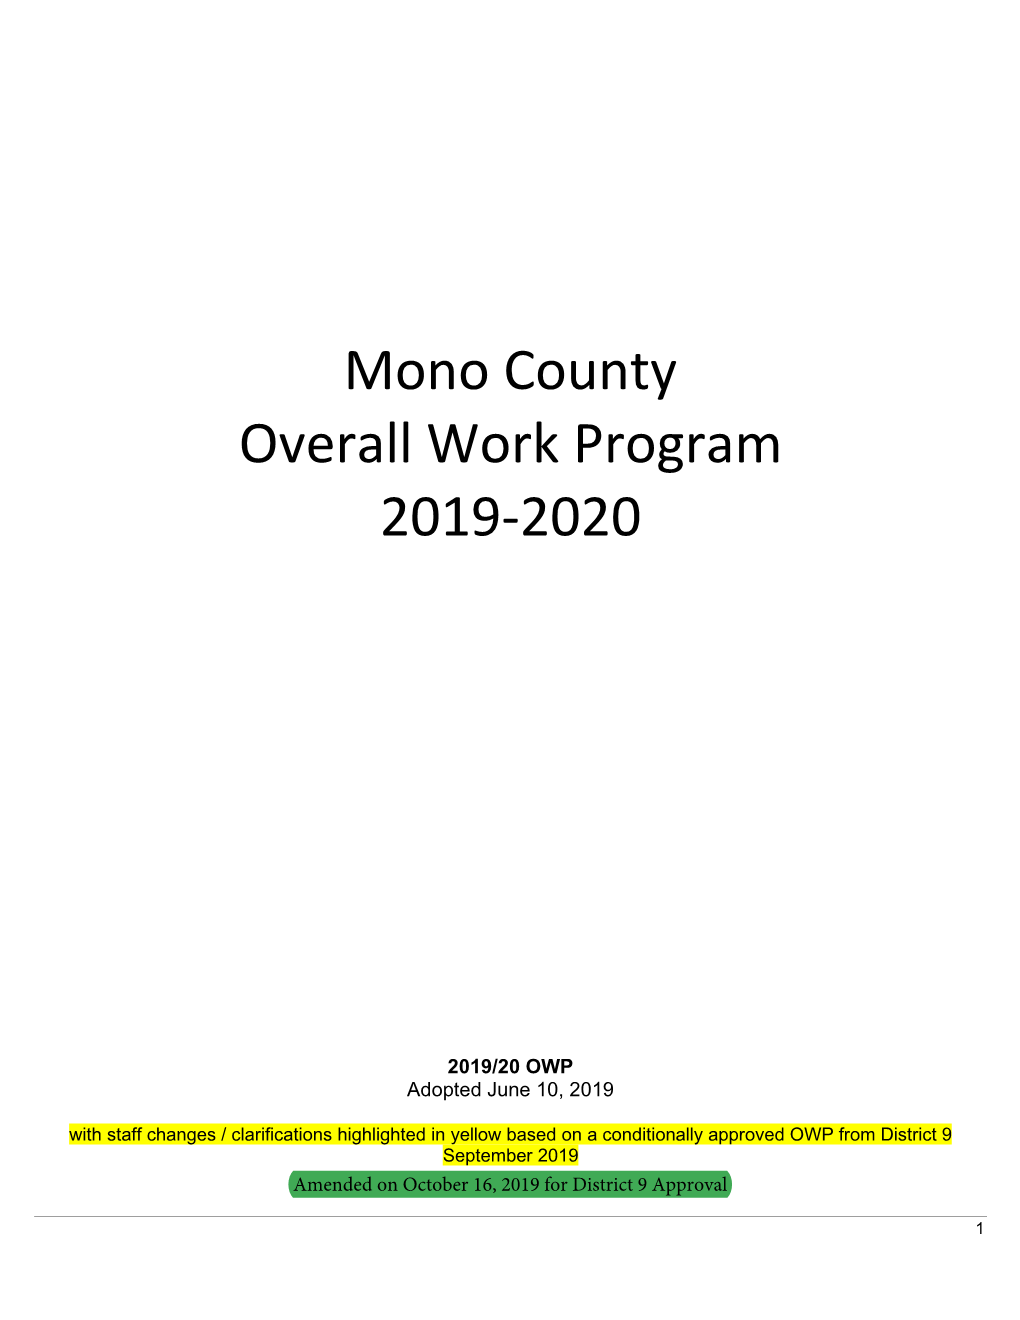 Mono County Overall Work Program 2019-2020